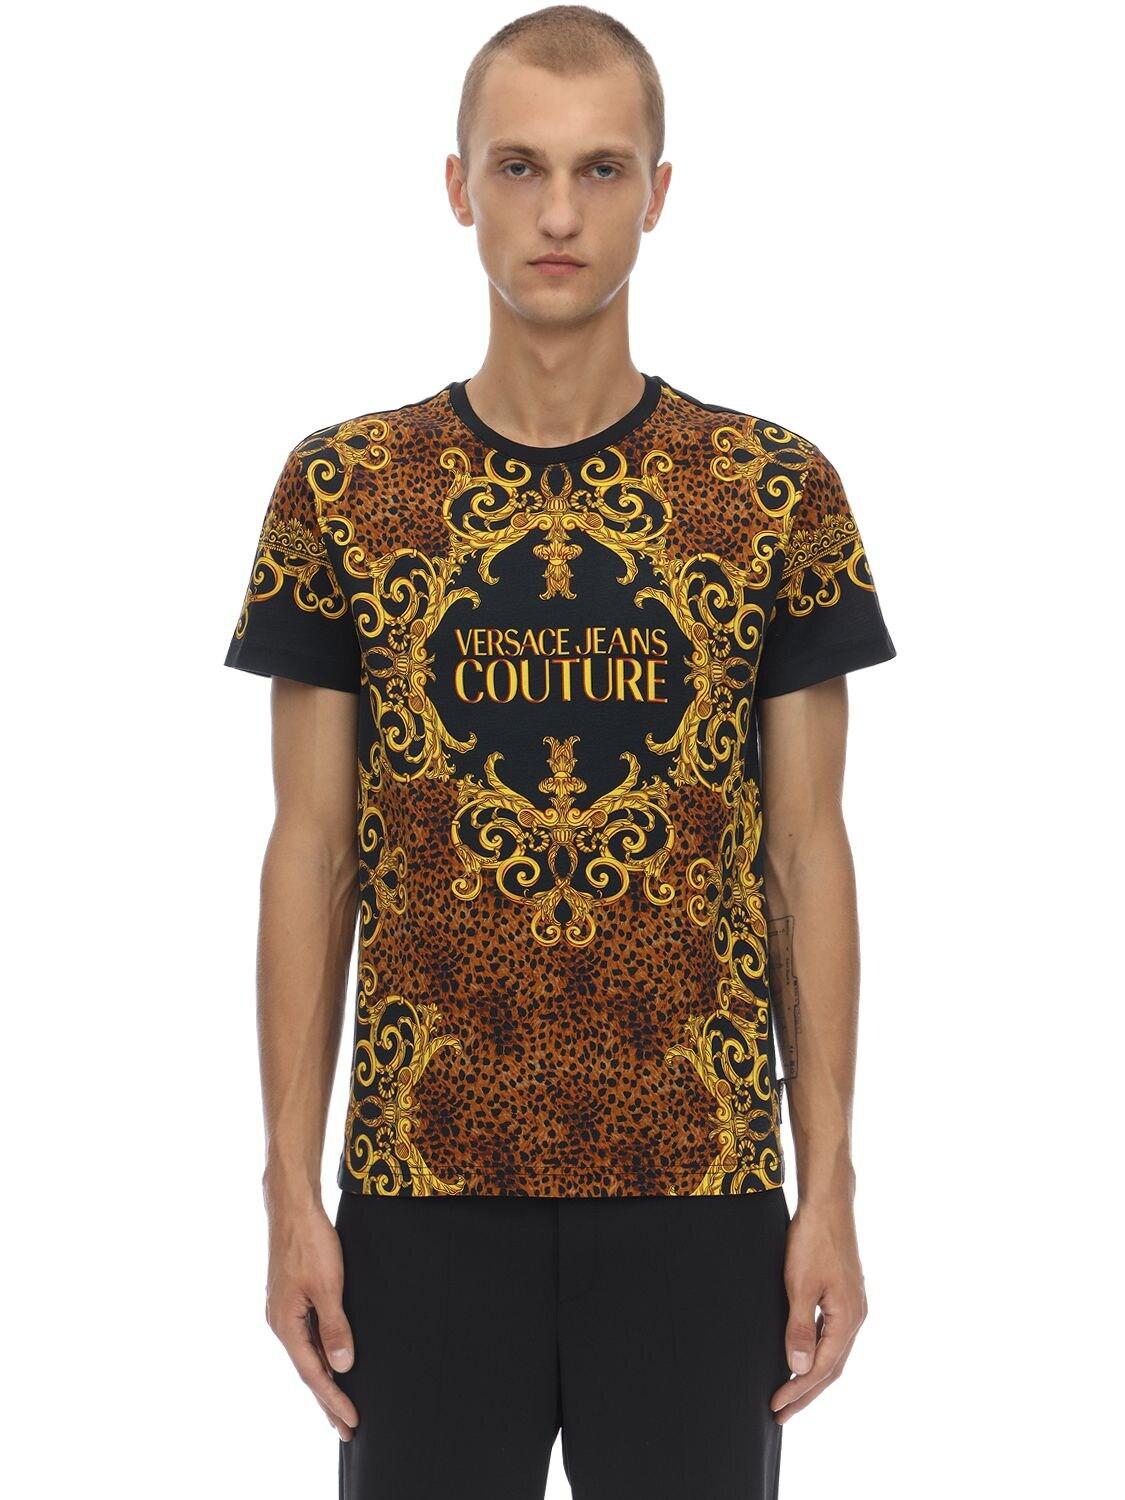 Versace Jeans Denim Baroque/leopard Print T-shirt, Slim Fit Logo Tee in ...